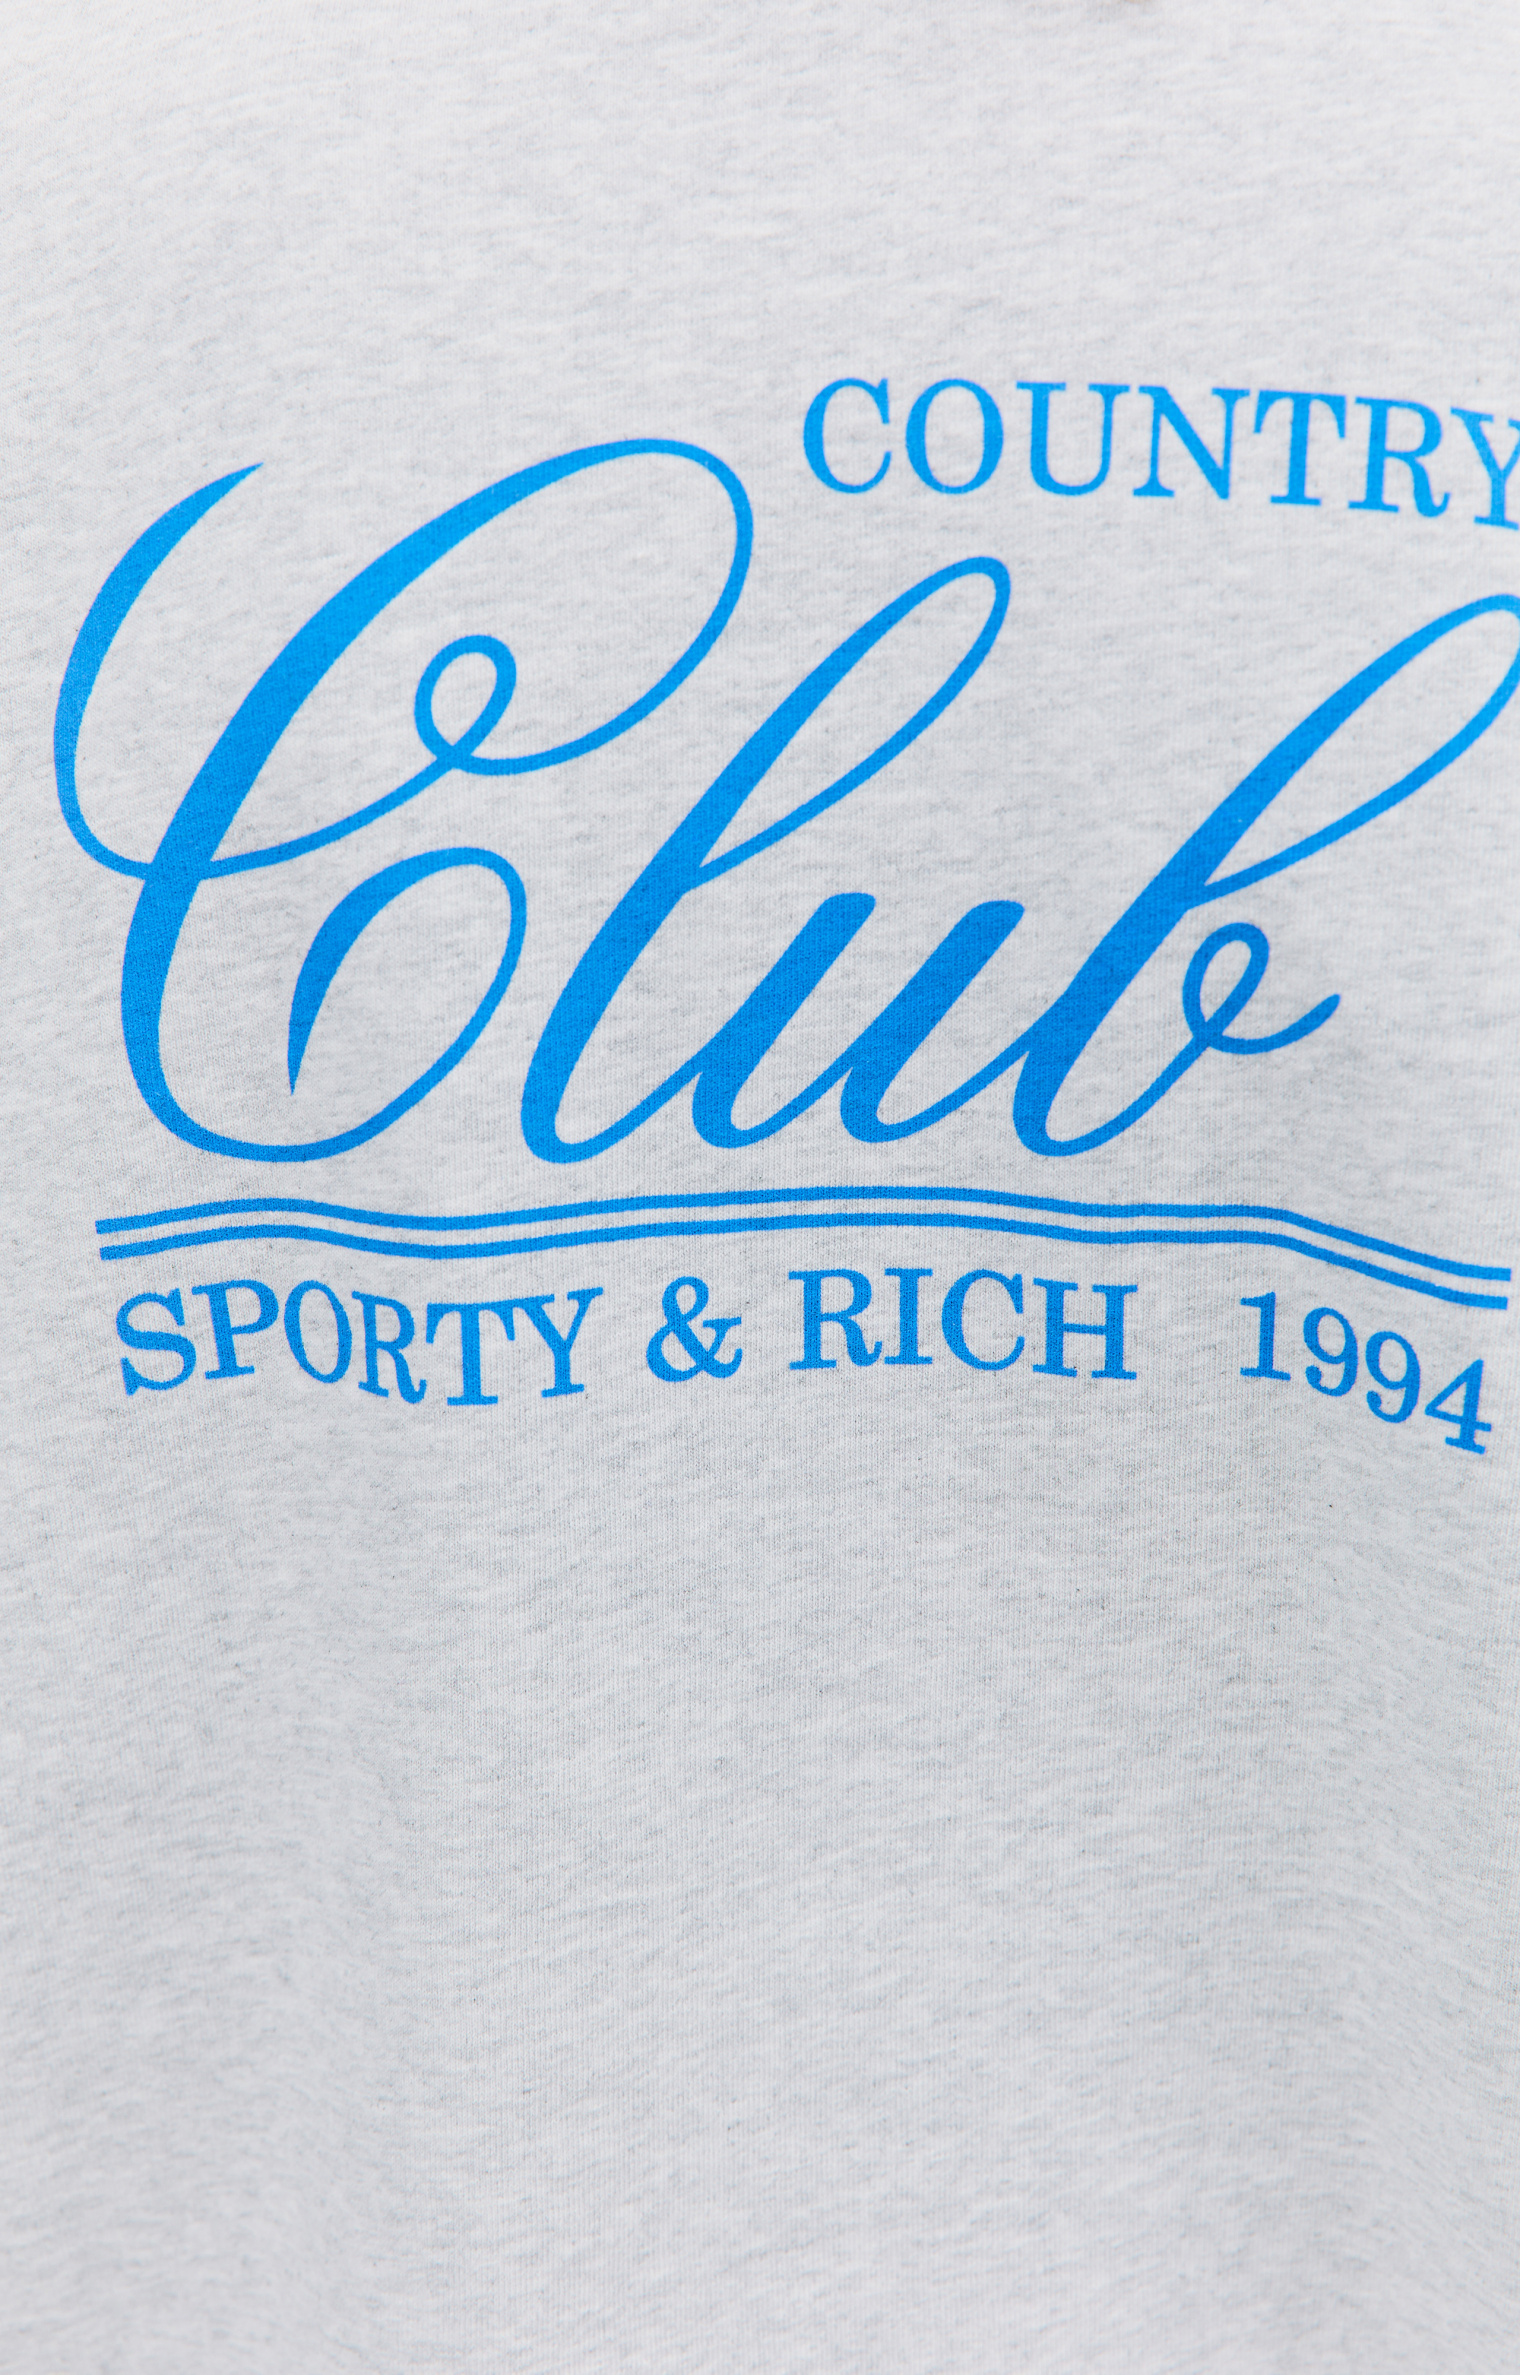 SPORTY & RICH \'94 Country Club\' cotton sweatshirt